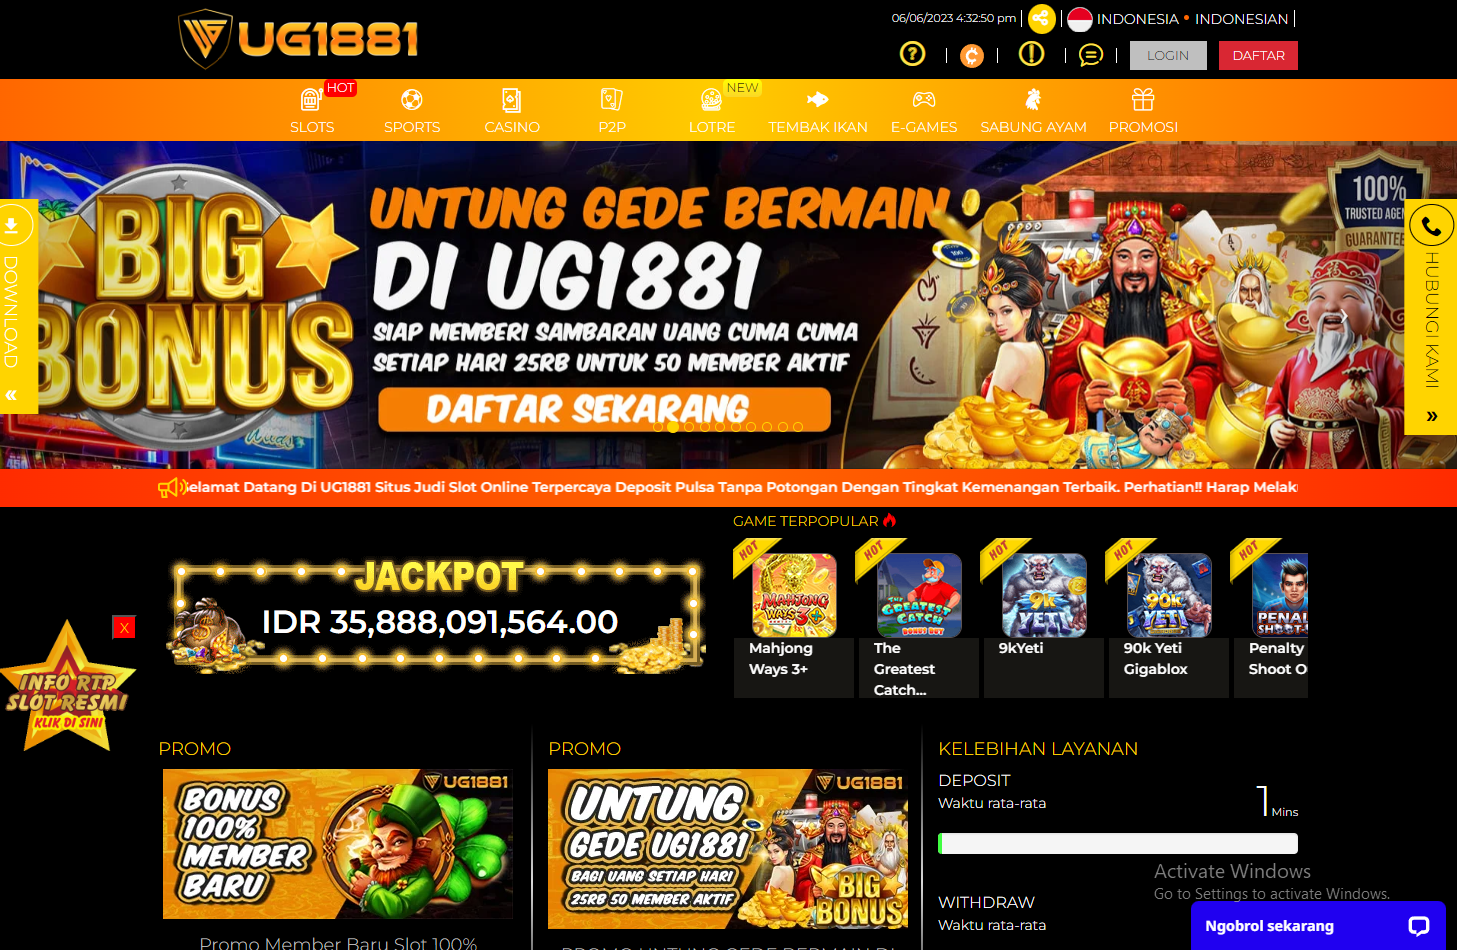 Situs UG SLOT UG1881 | Judi Online | Daftar Slot Deposit Pulsa